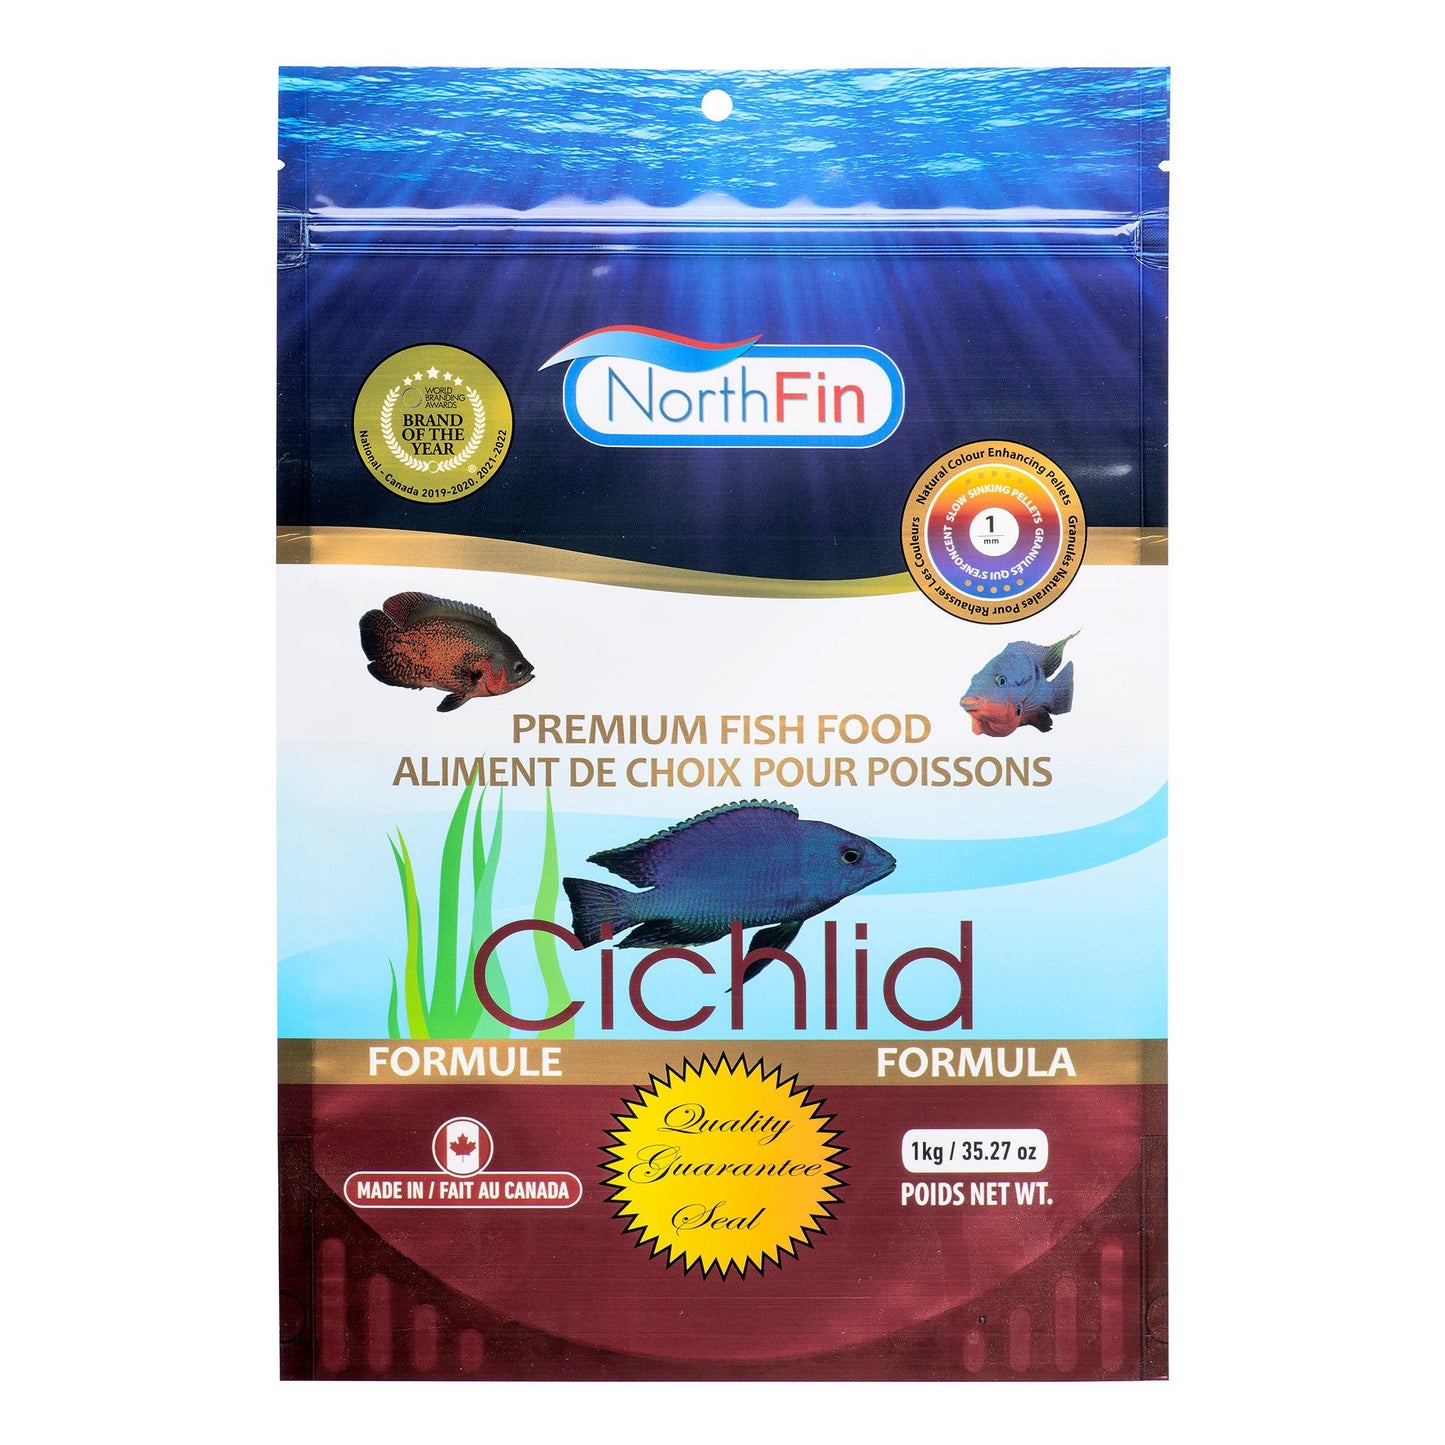 Northfin Fish Food Cichlid Formula 1mm / 1kg 700621474562 Super Cichlids